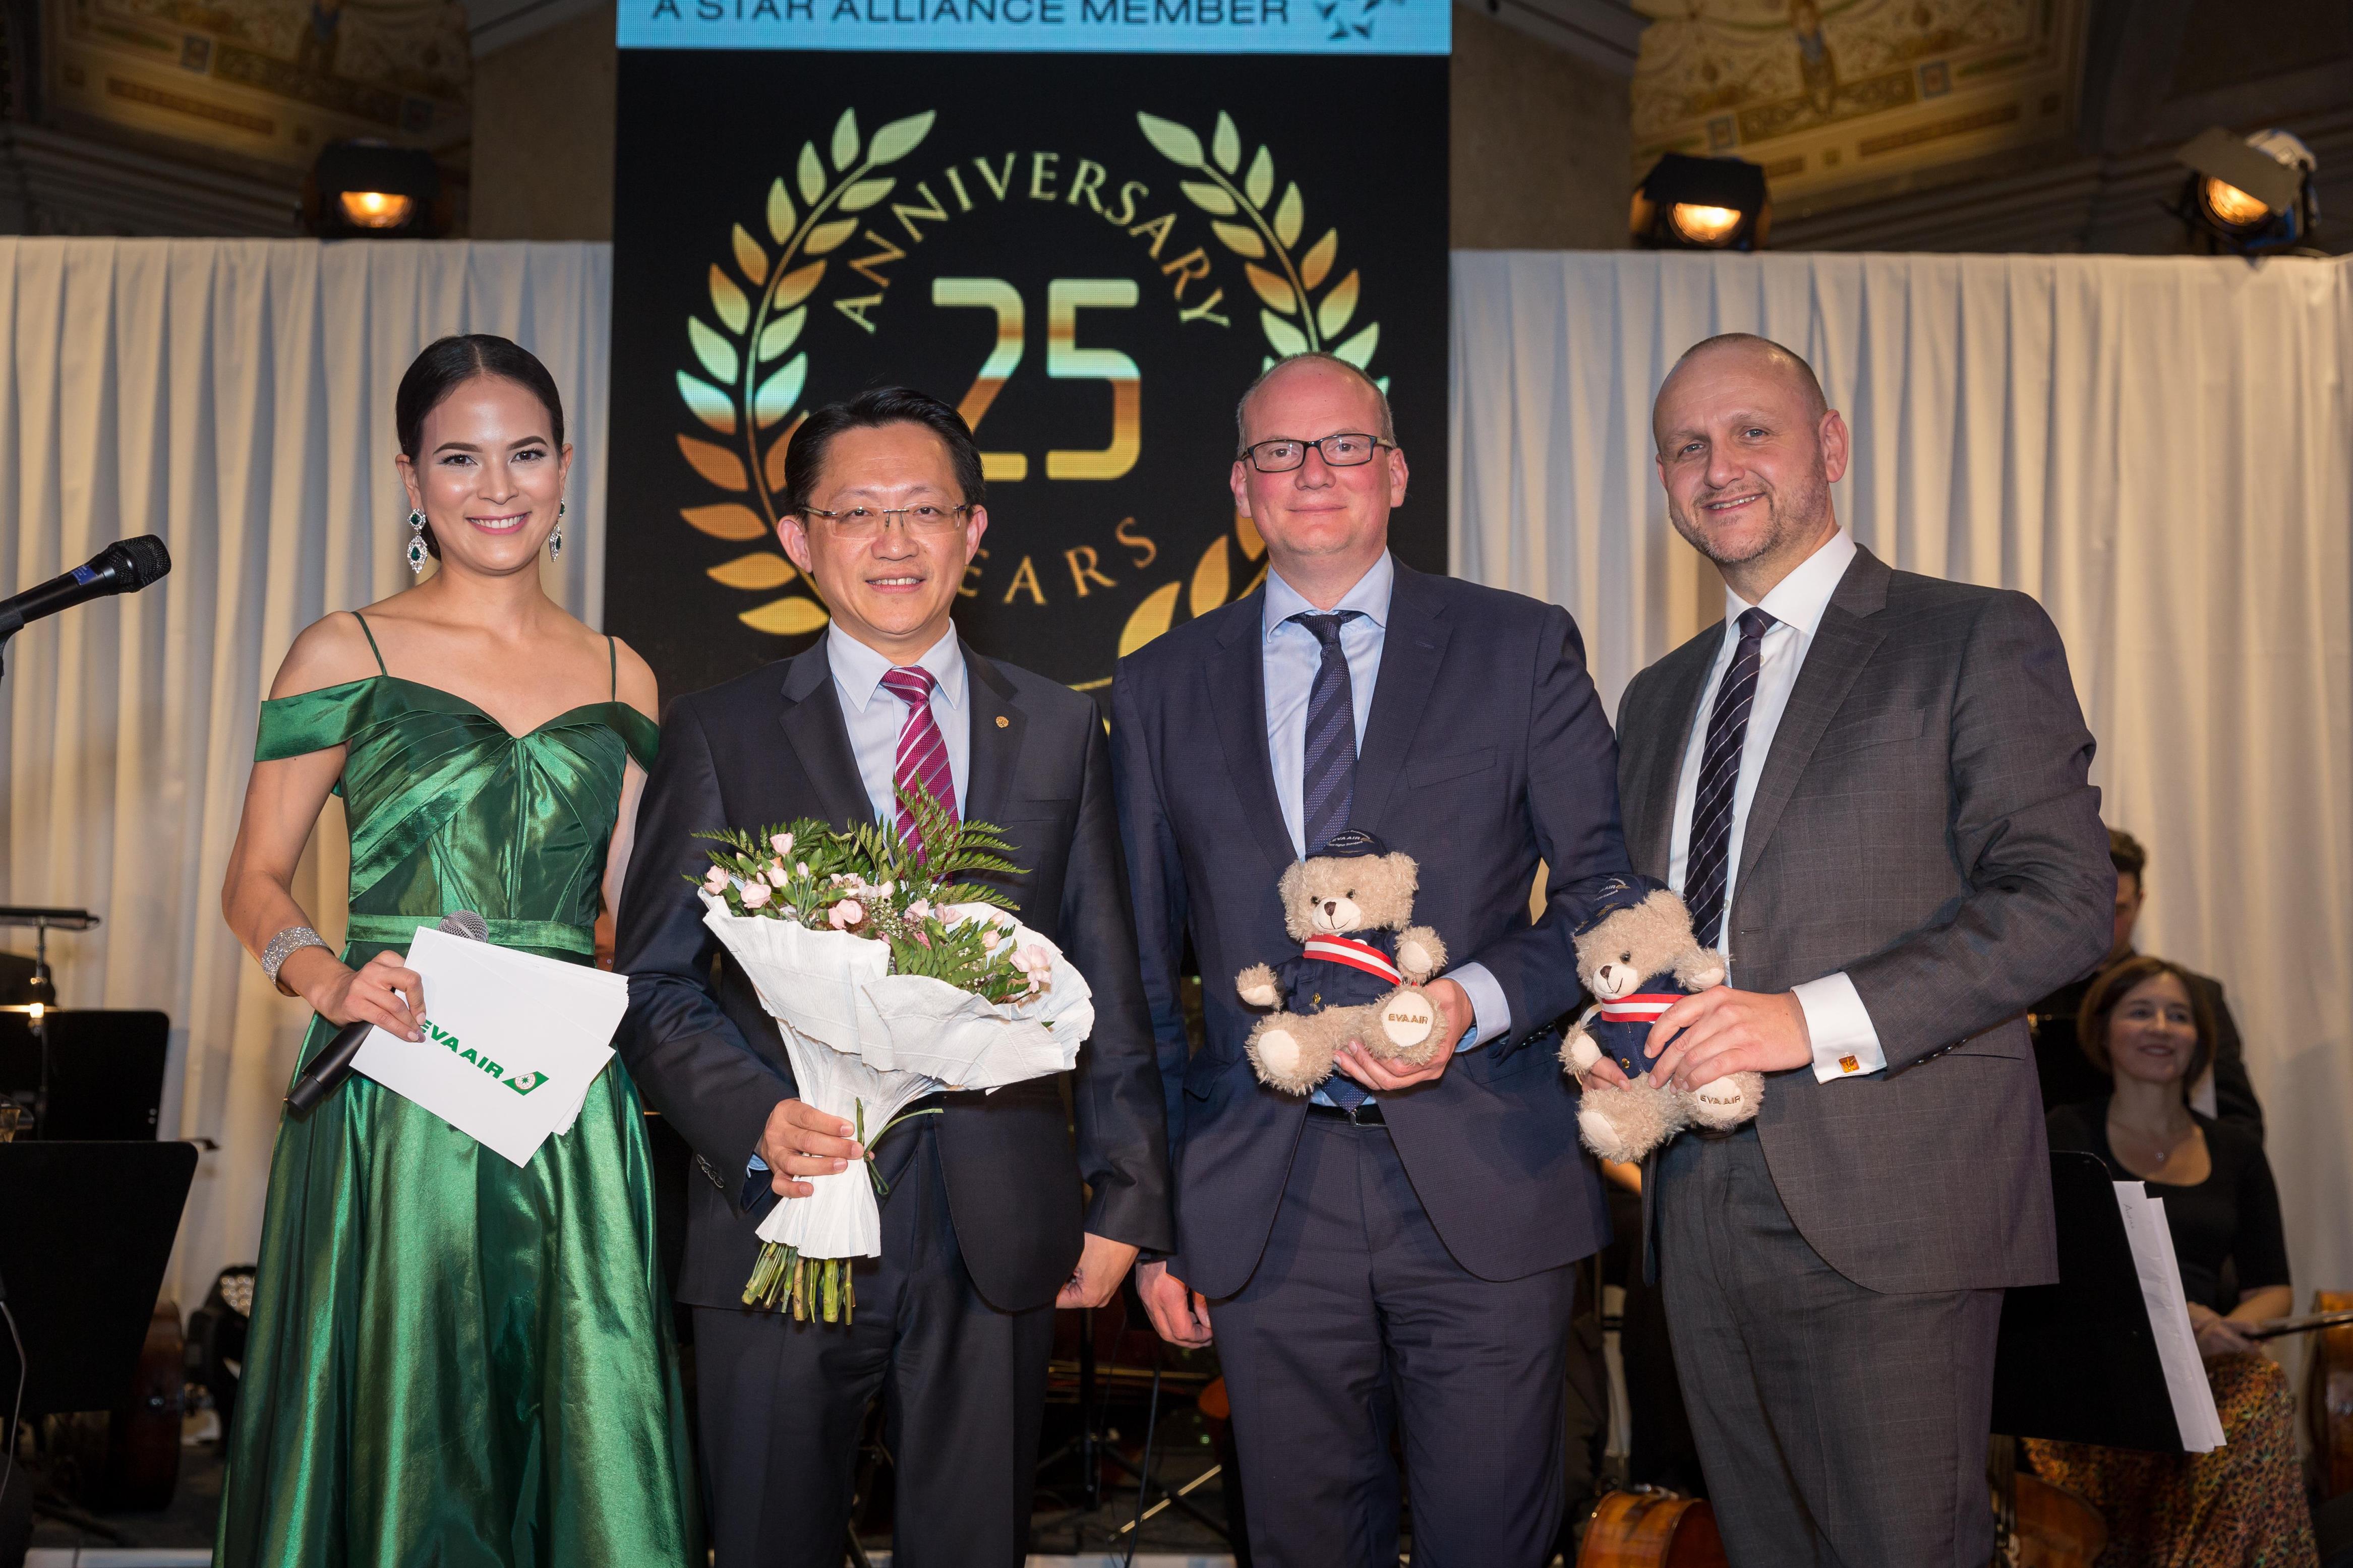 Eva Air celebrates its 25 years in Vienna